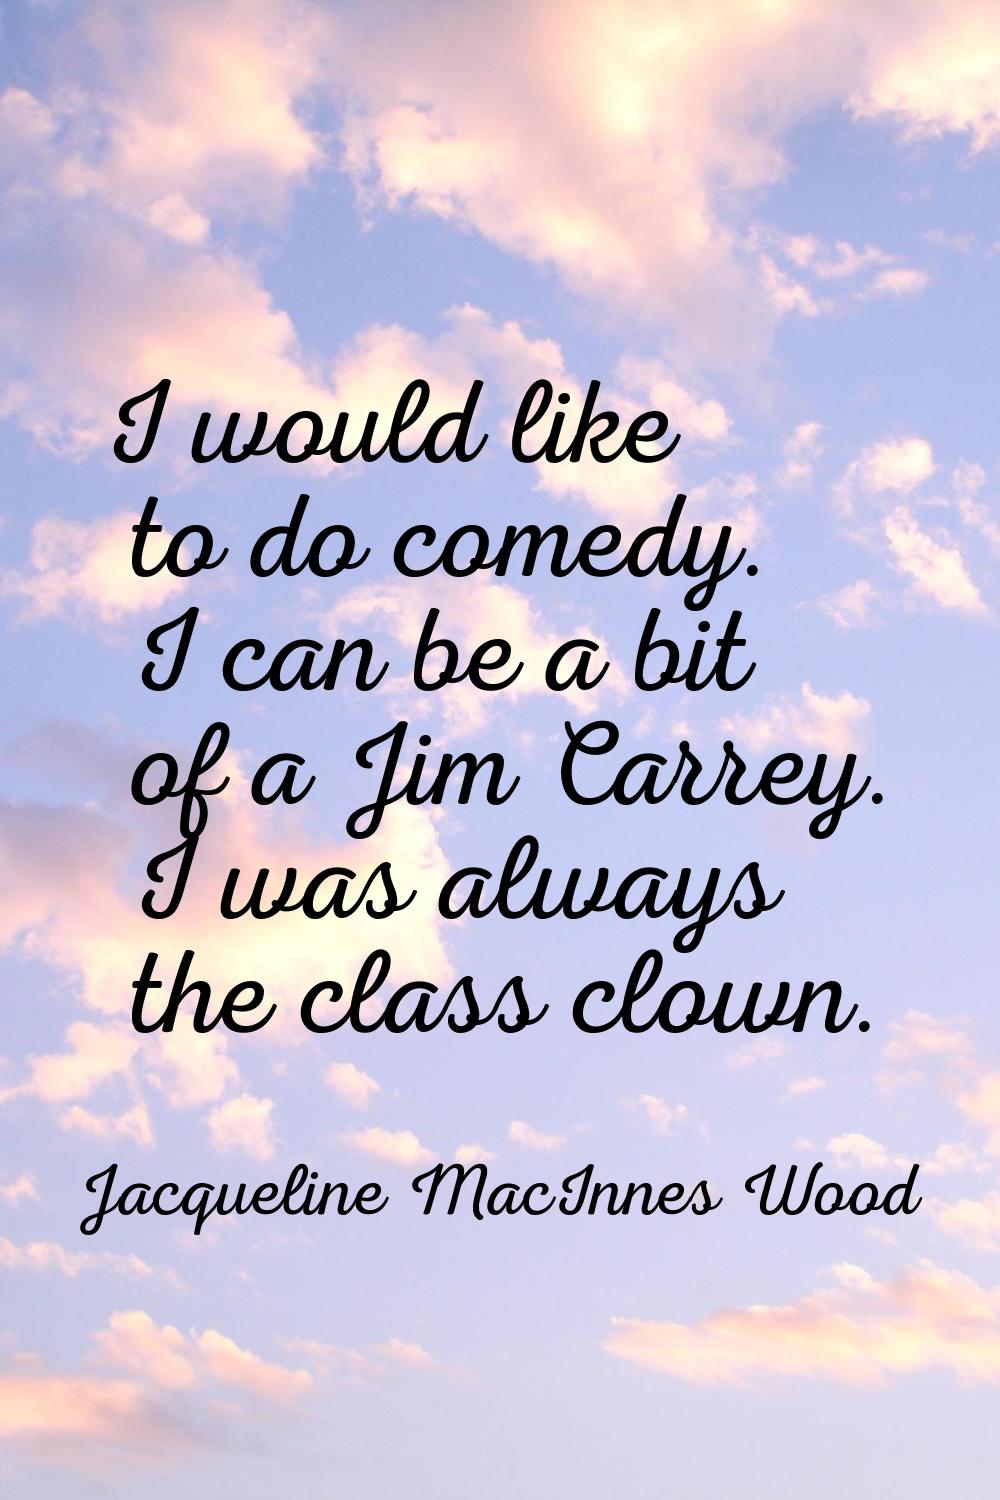 I would like to do comedy. I can be a bit of a Jim Carrey. I was always the class clown.